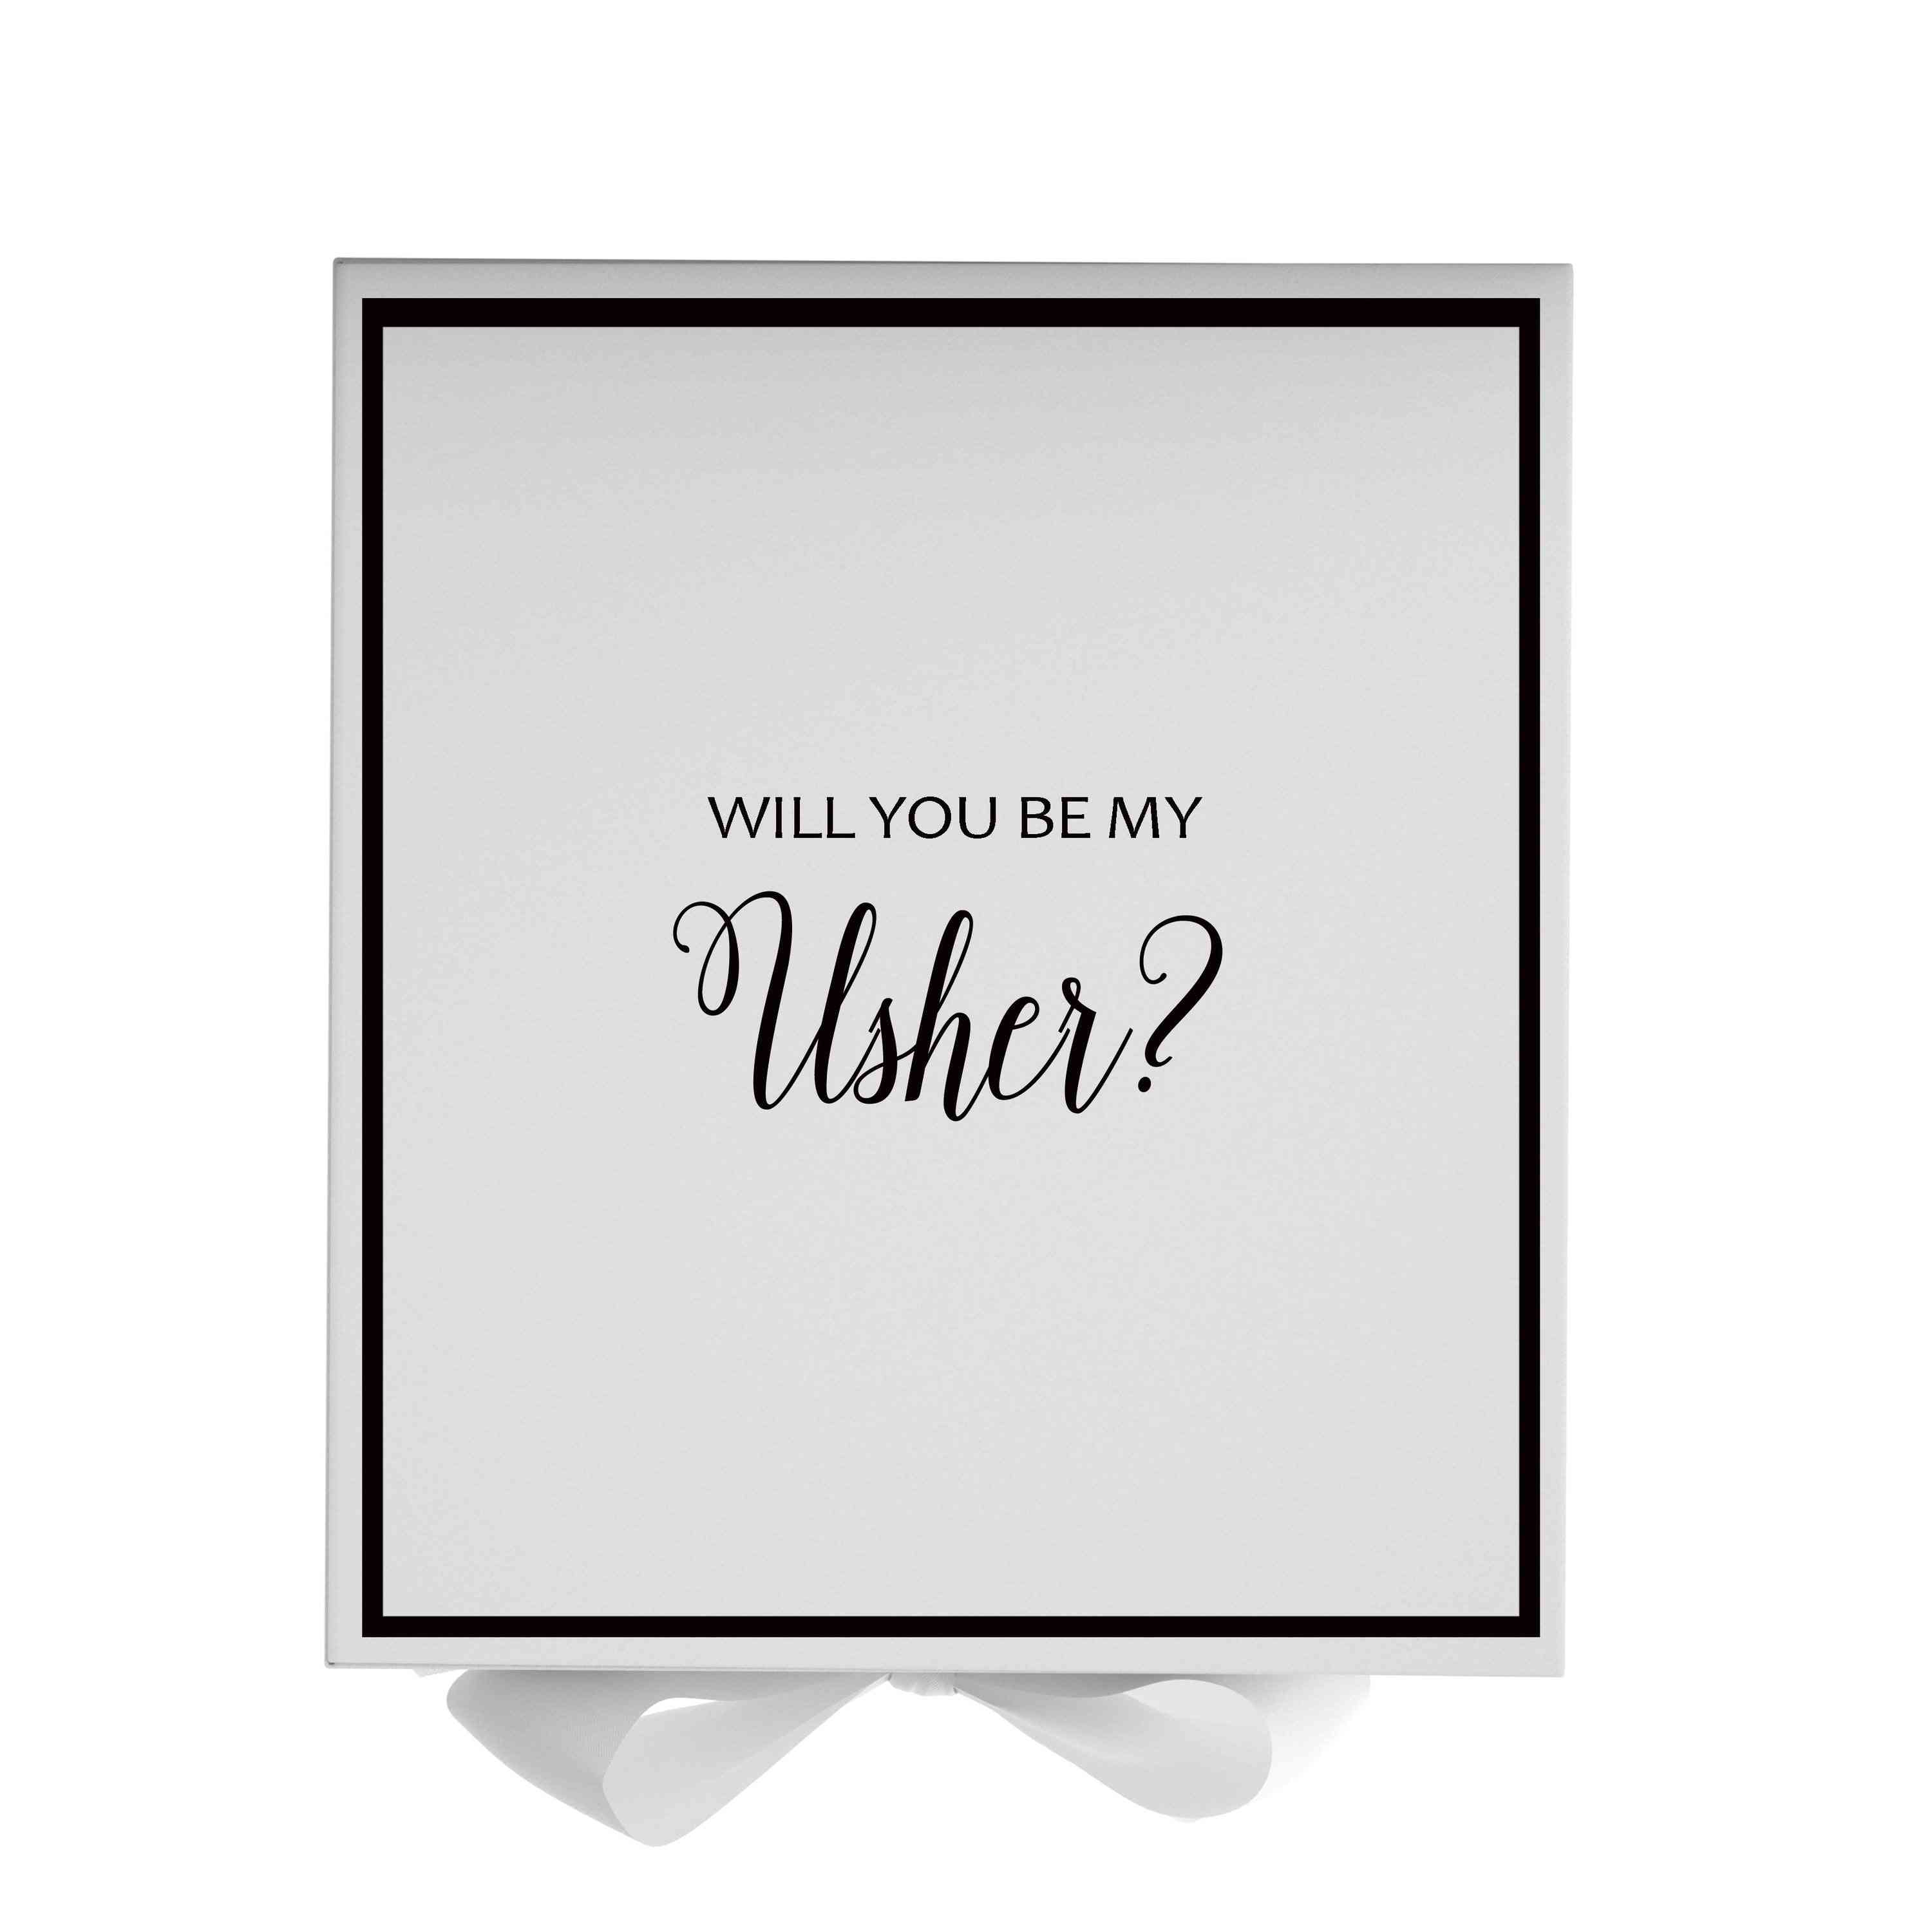 Will You Be My Usher? Proposal Box White -  Border